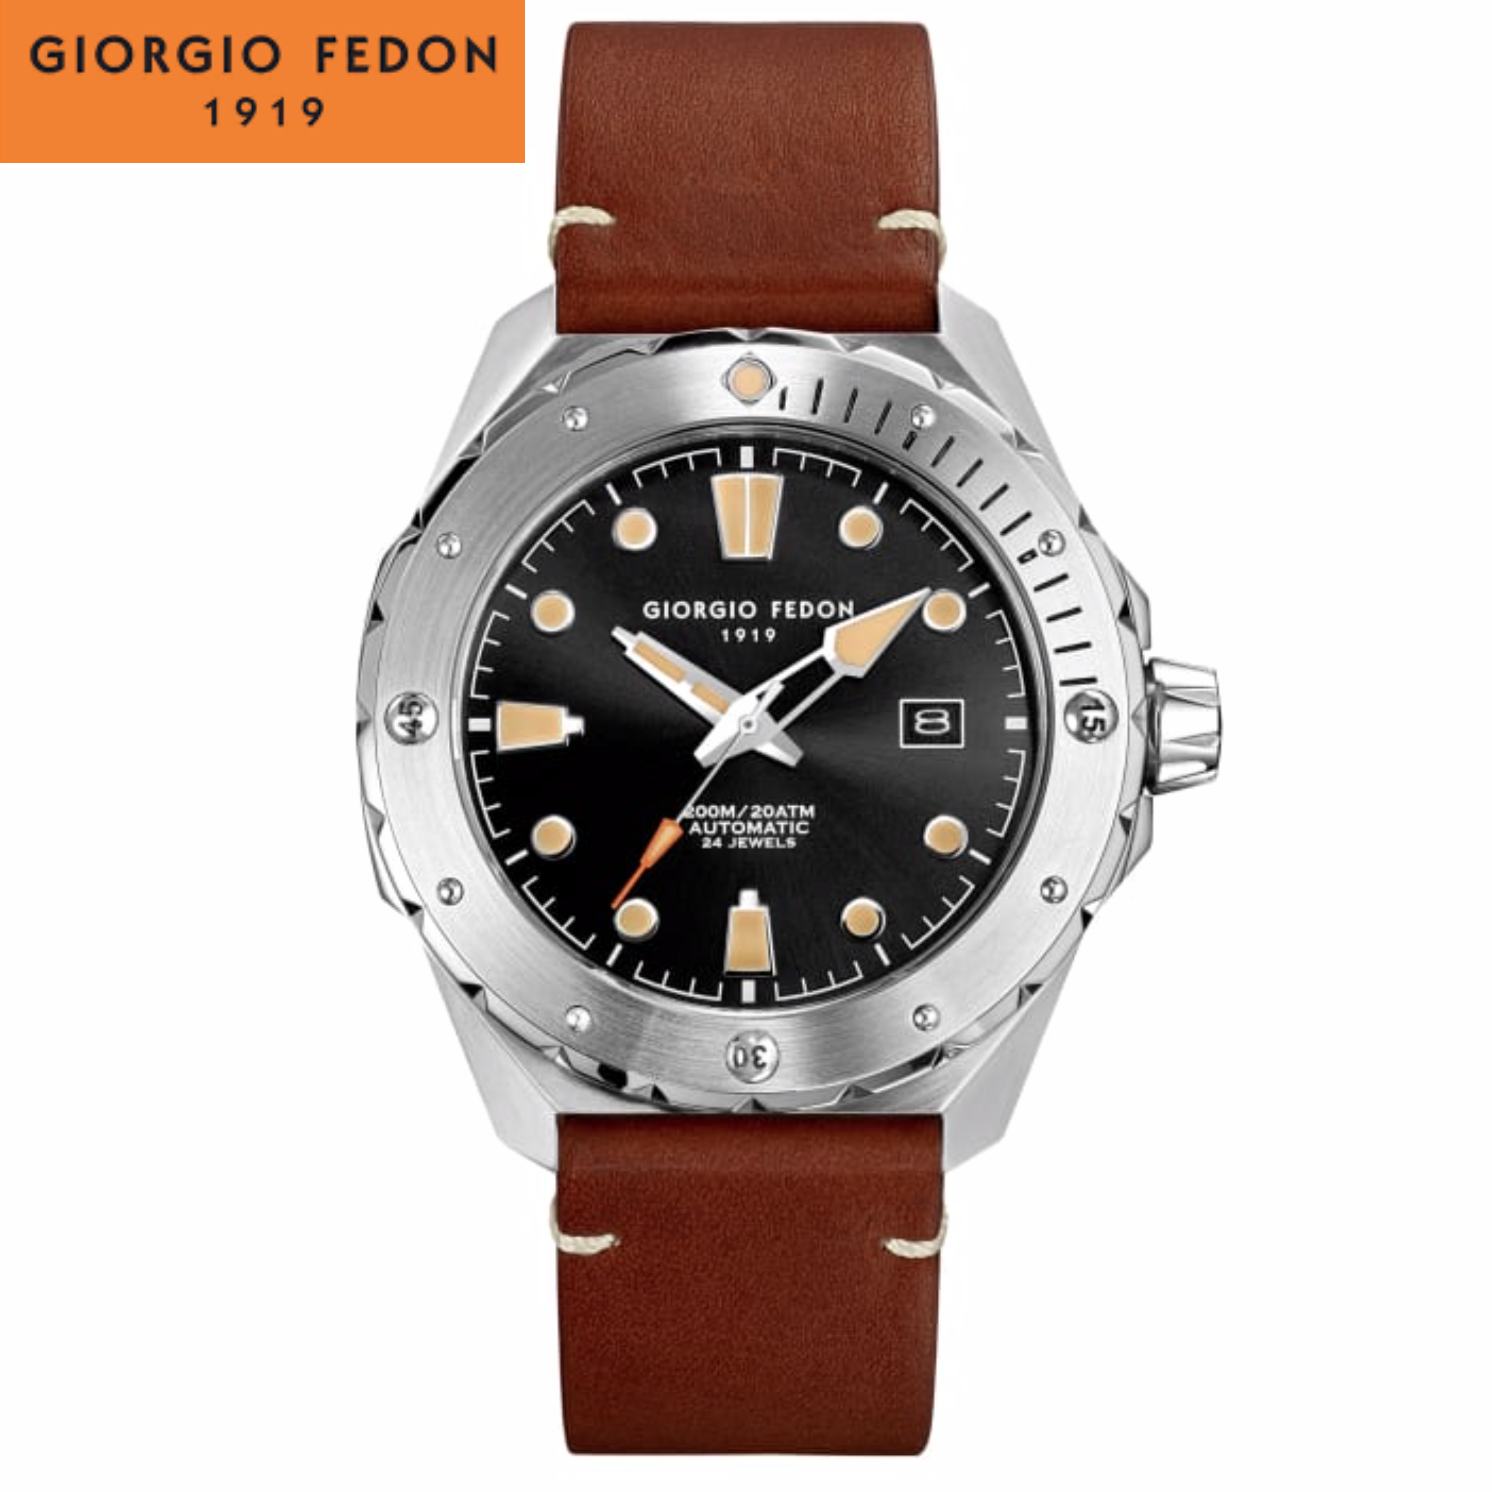 Giorgio Fedon 喬治菲登1919 Ocean Walker  海行者系列 機械腕錶 GFCJ002黑x咖啡/45mm